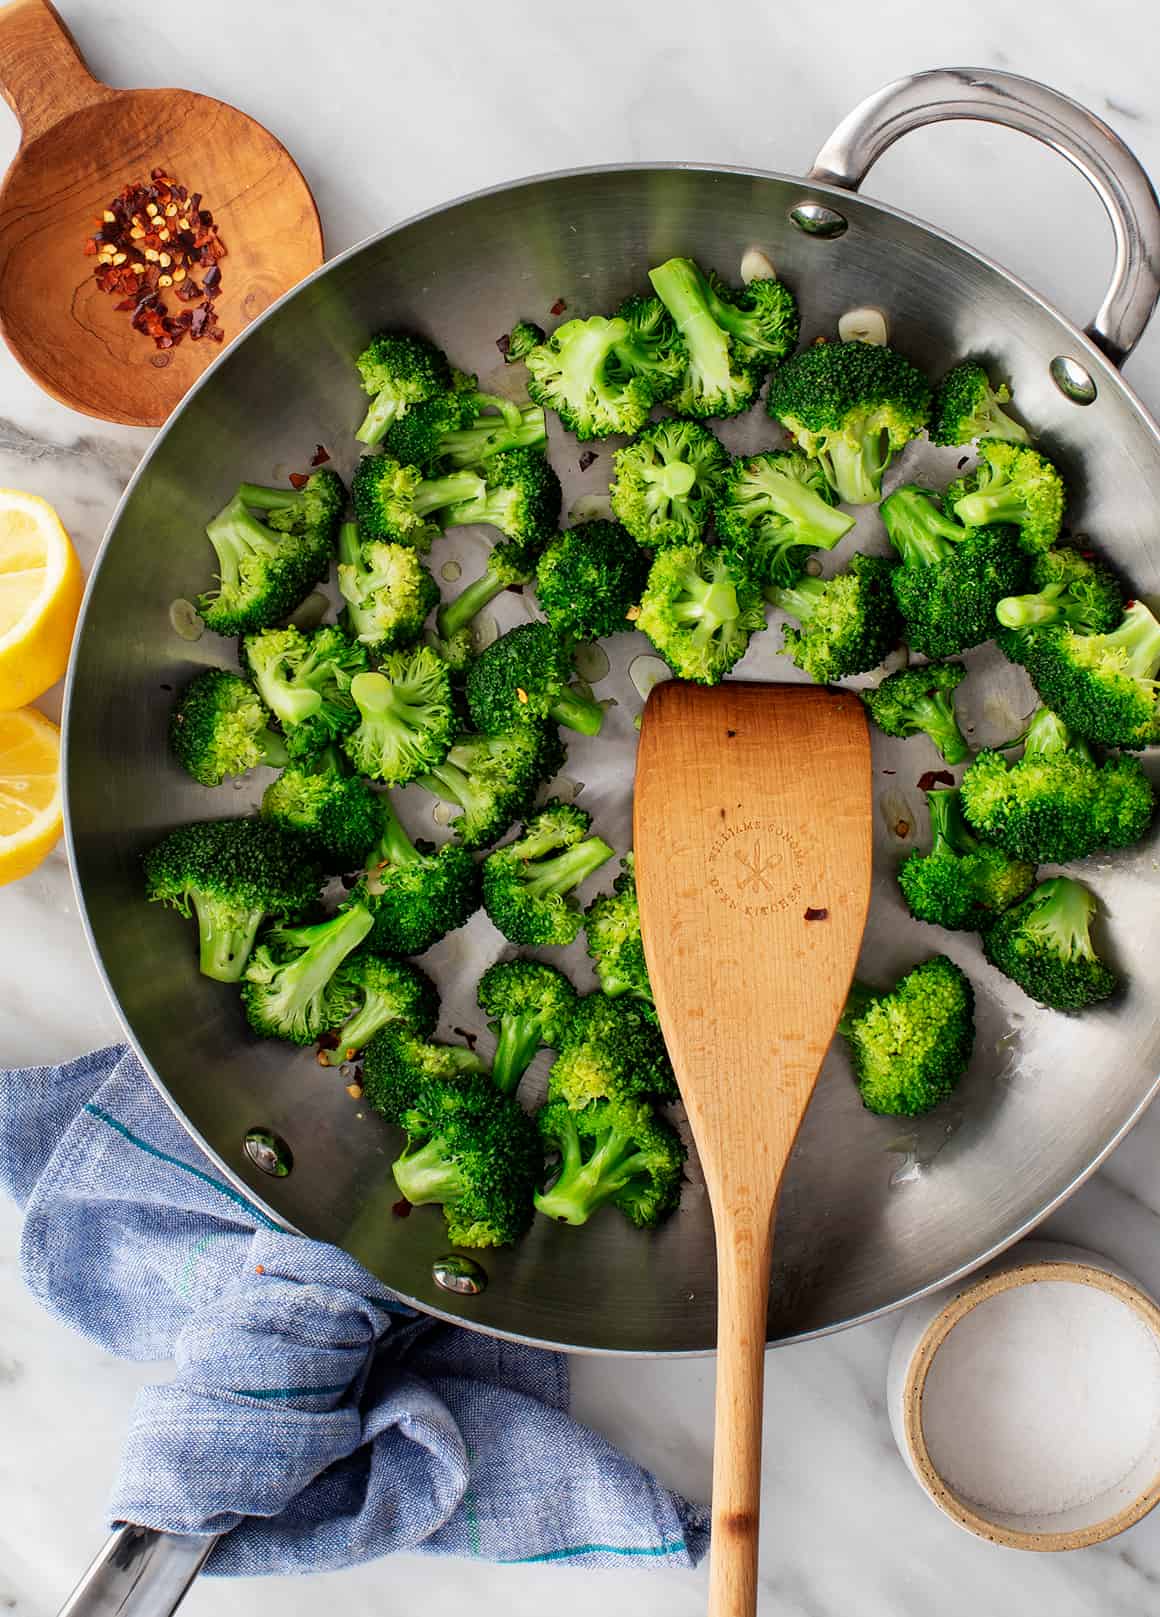 Sautéed broccoli